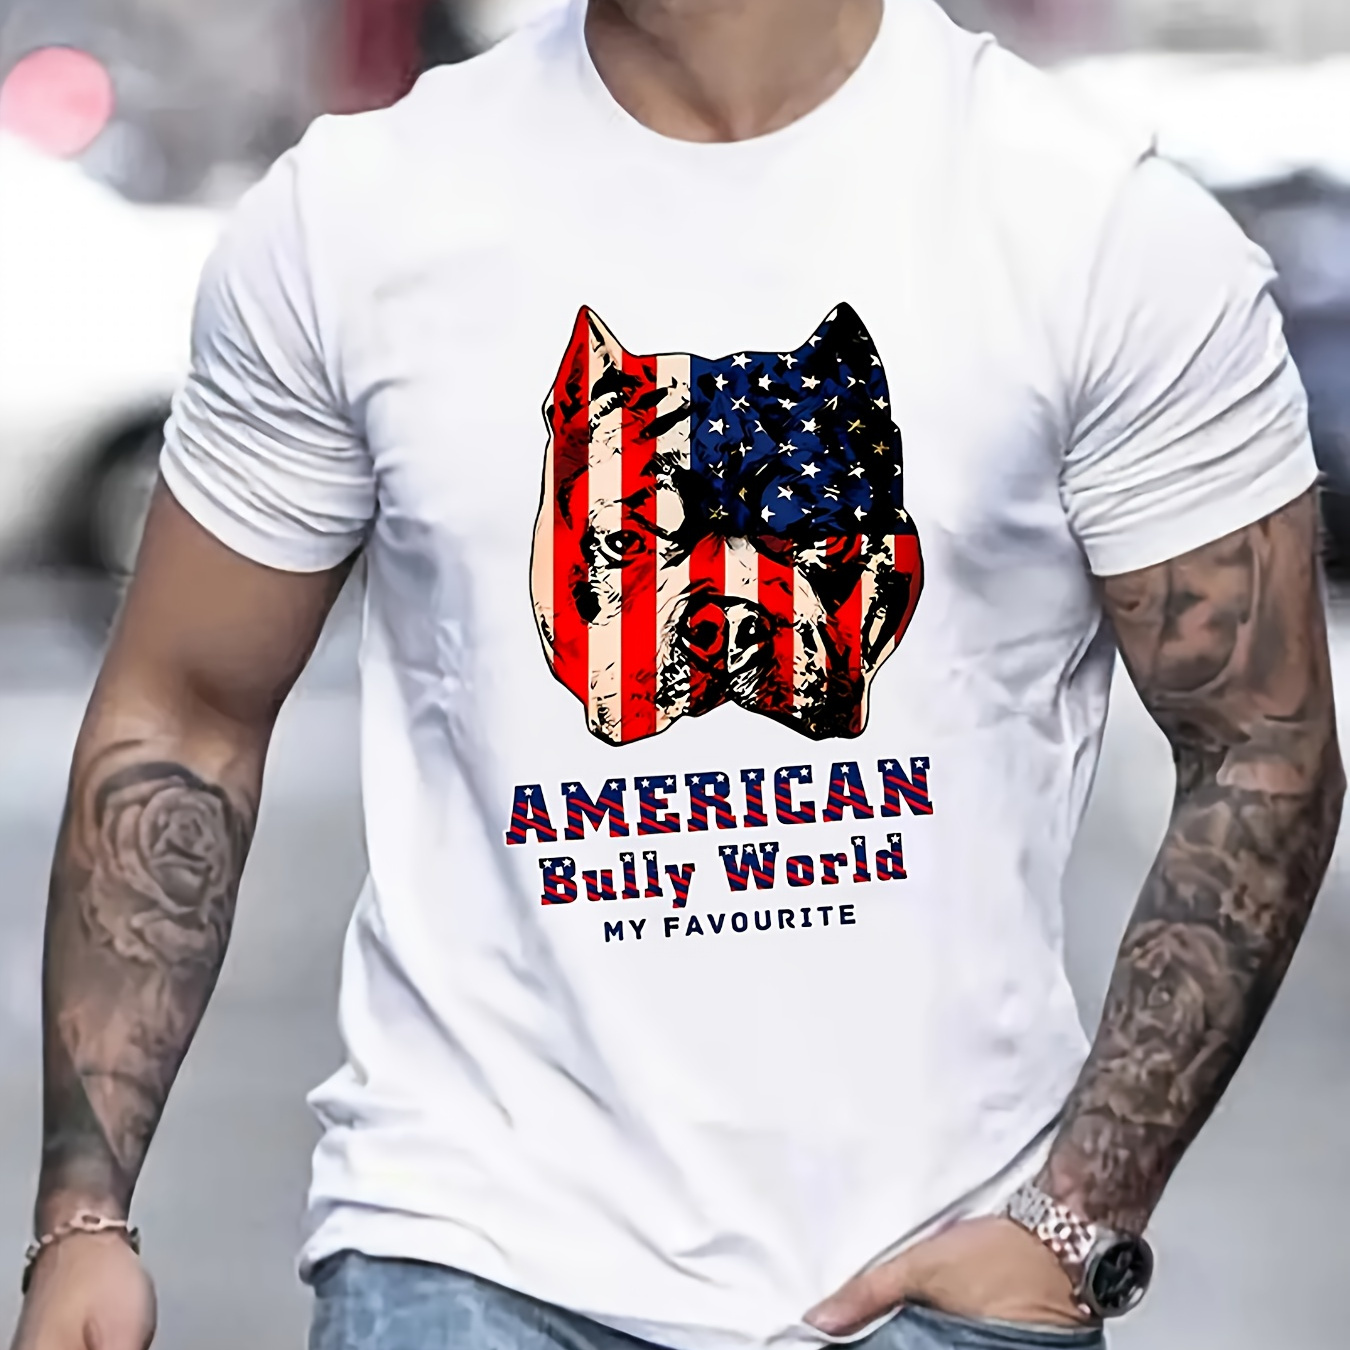 

American Bully World Print T Shirt, Tees For Men, Casual Short Sleeve T-shirt For Summer